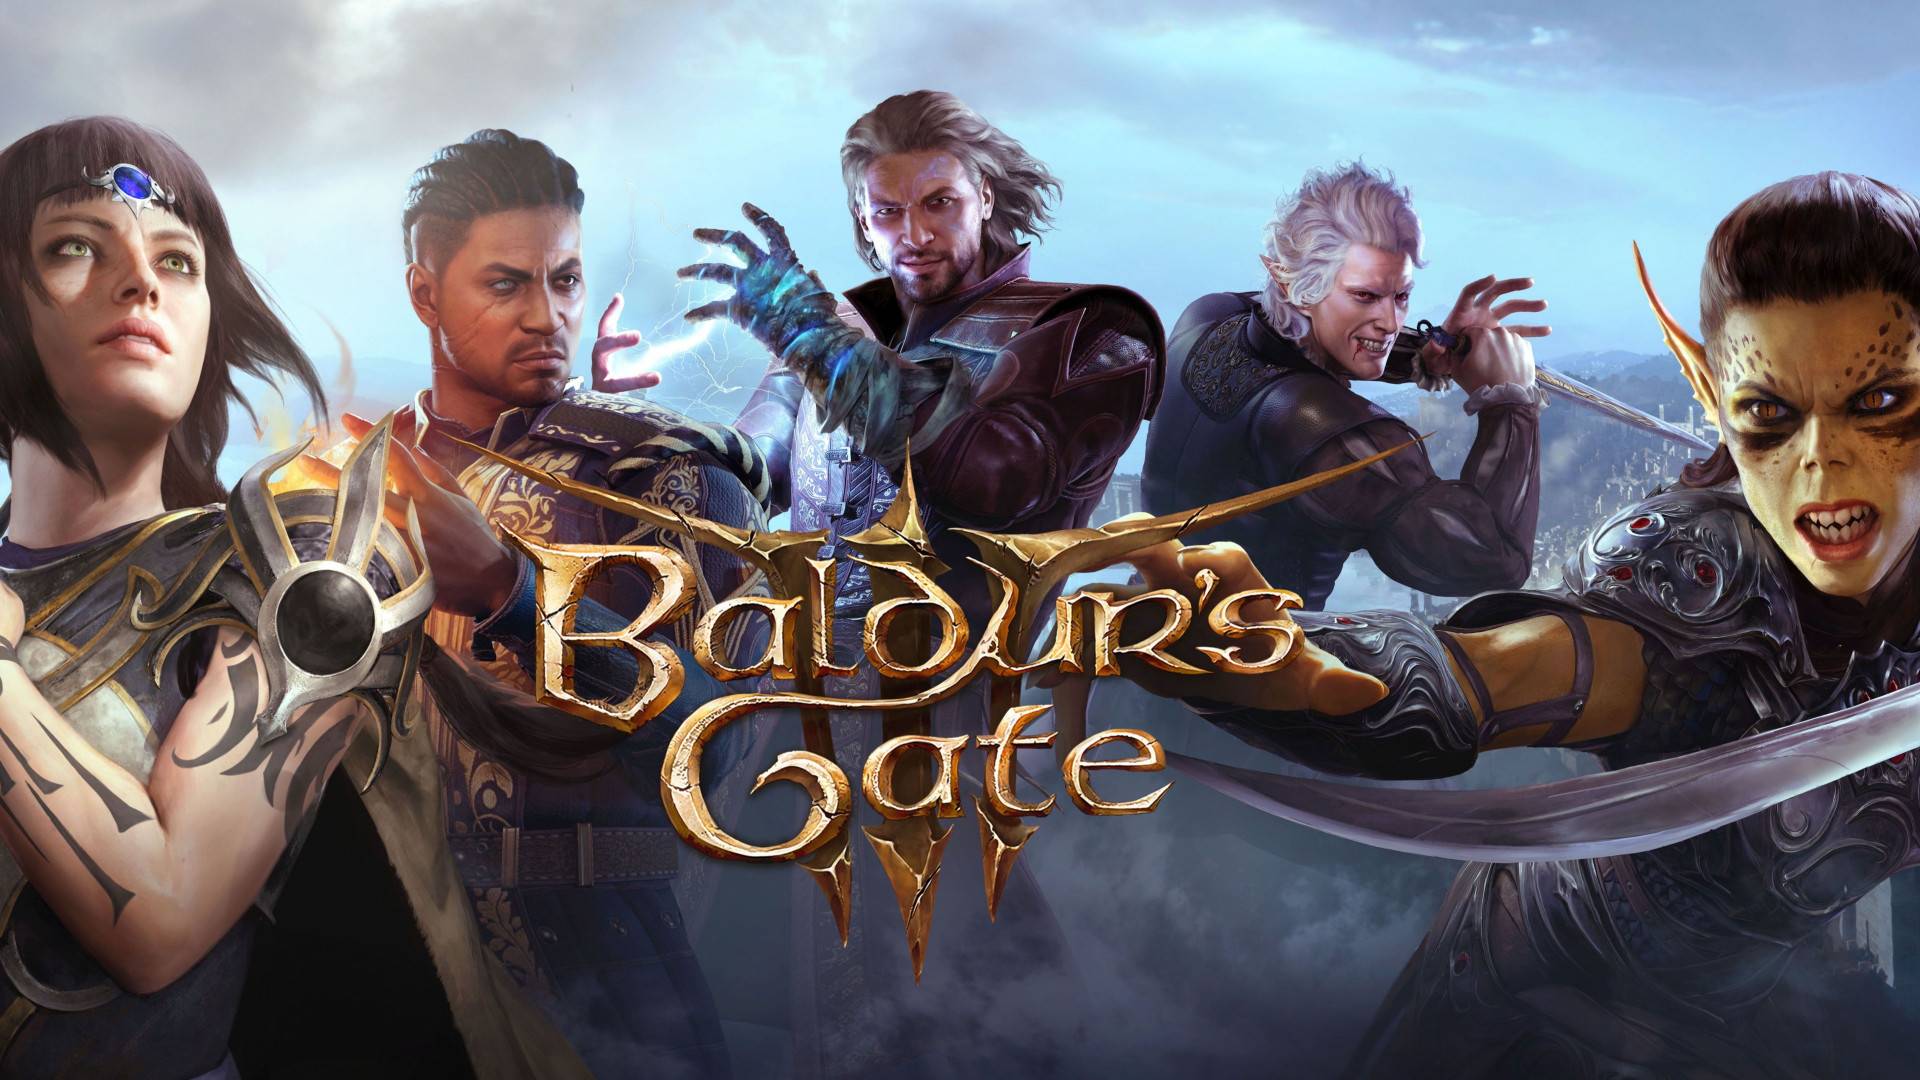 Baldurs Gate 3 Products on Sale